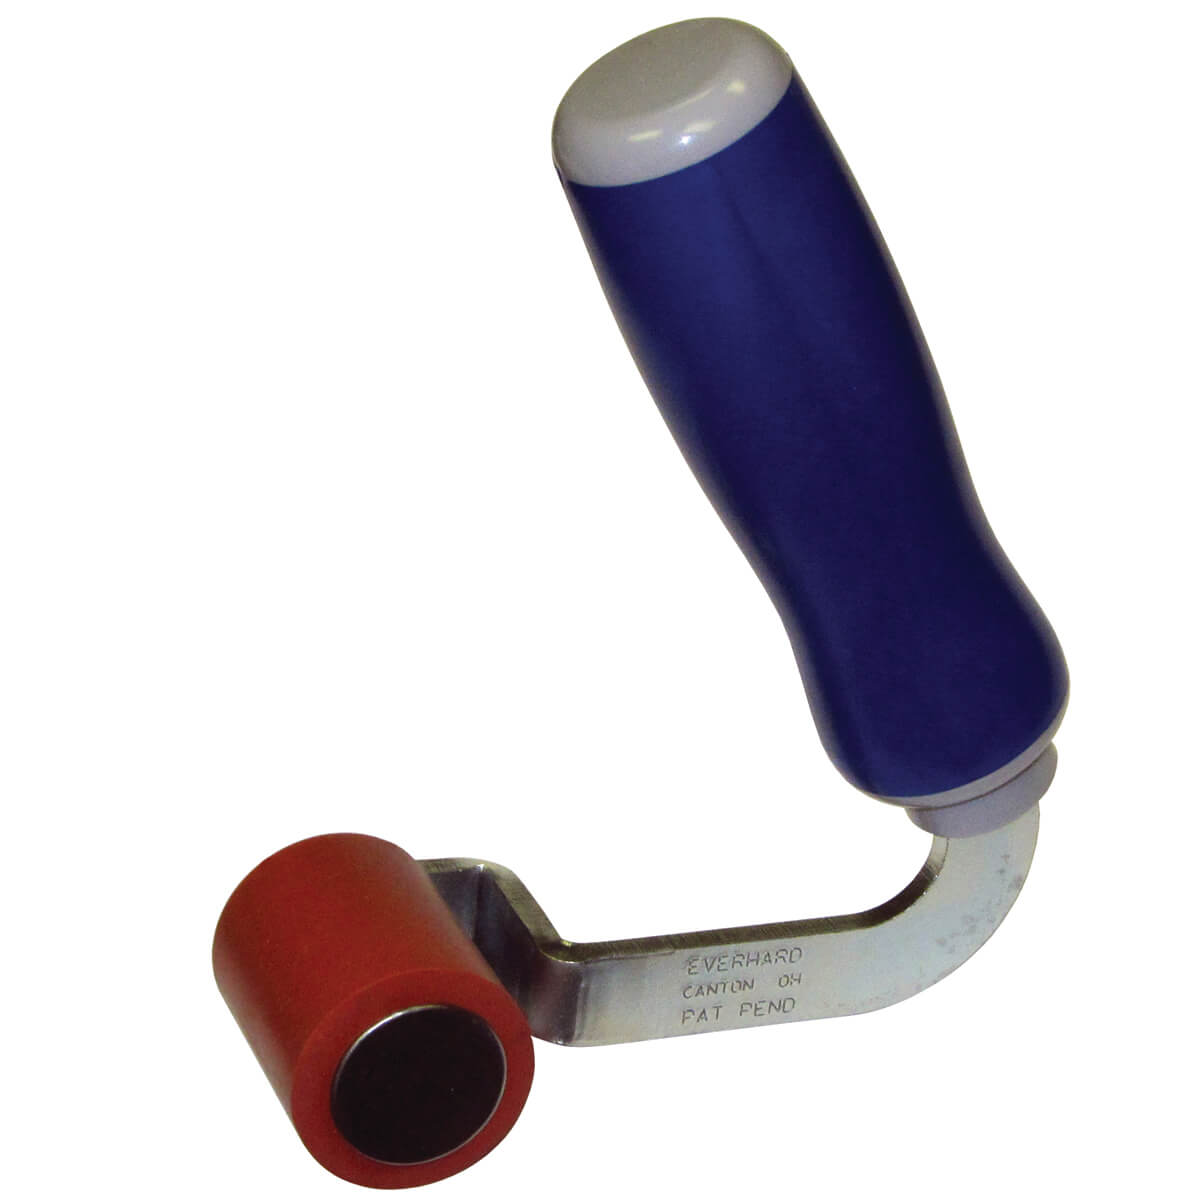 MR05200 Everhard Wrist-saver Silicone Rubber Roller 1 for sale online